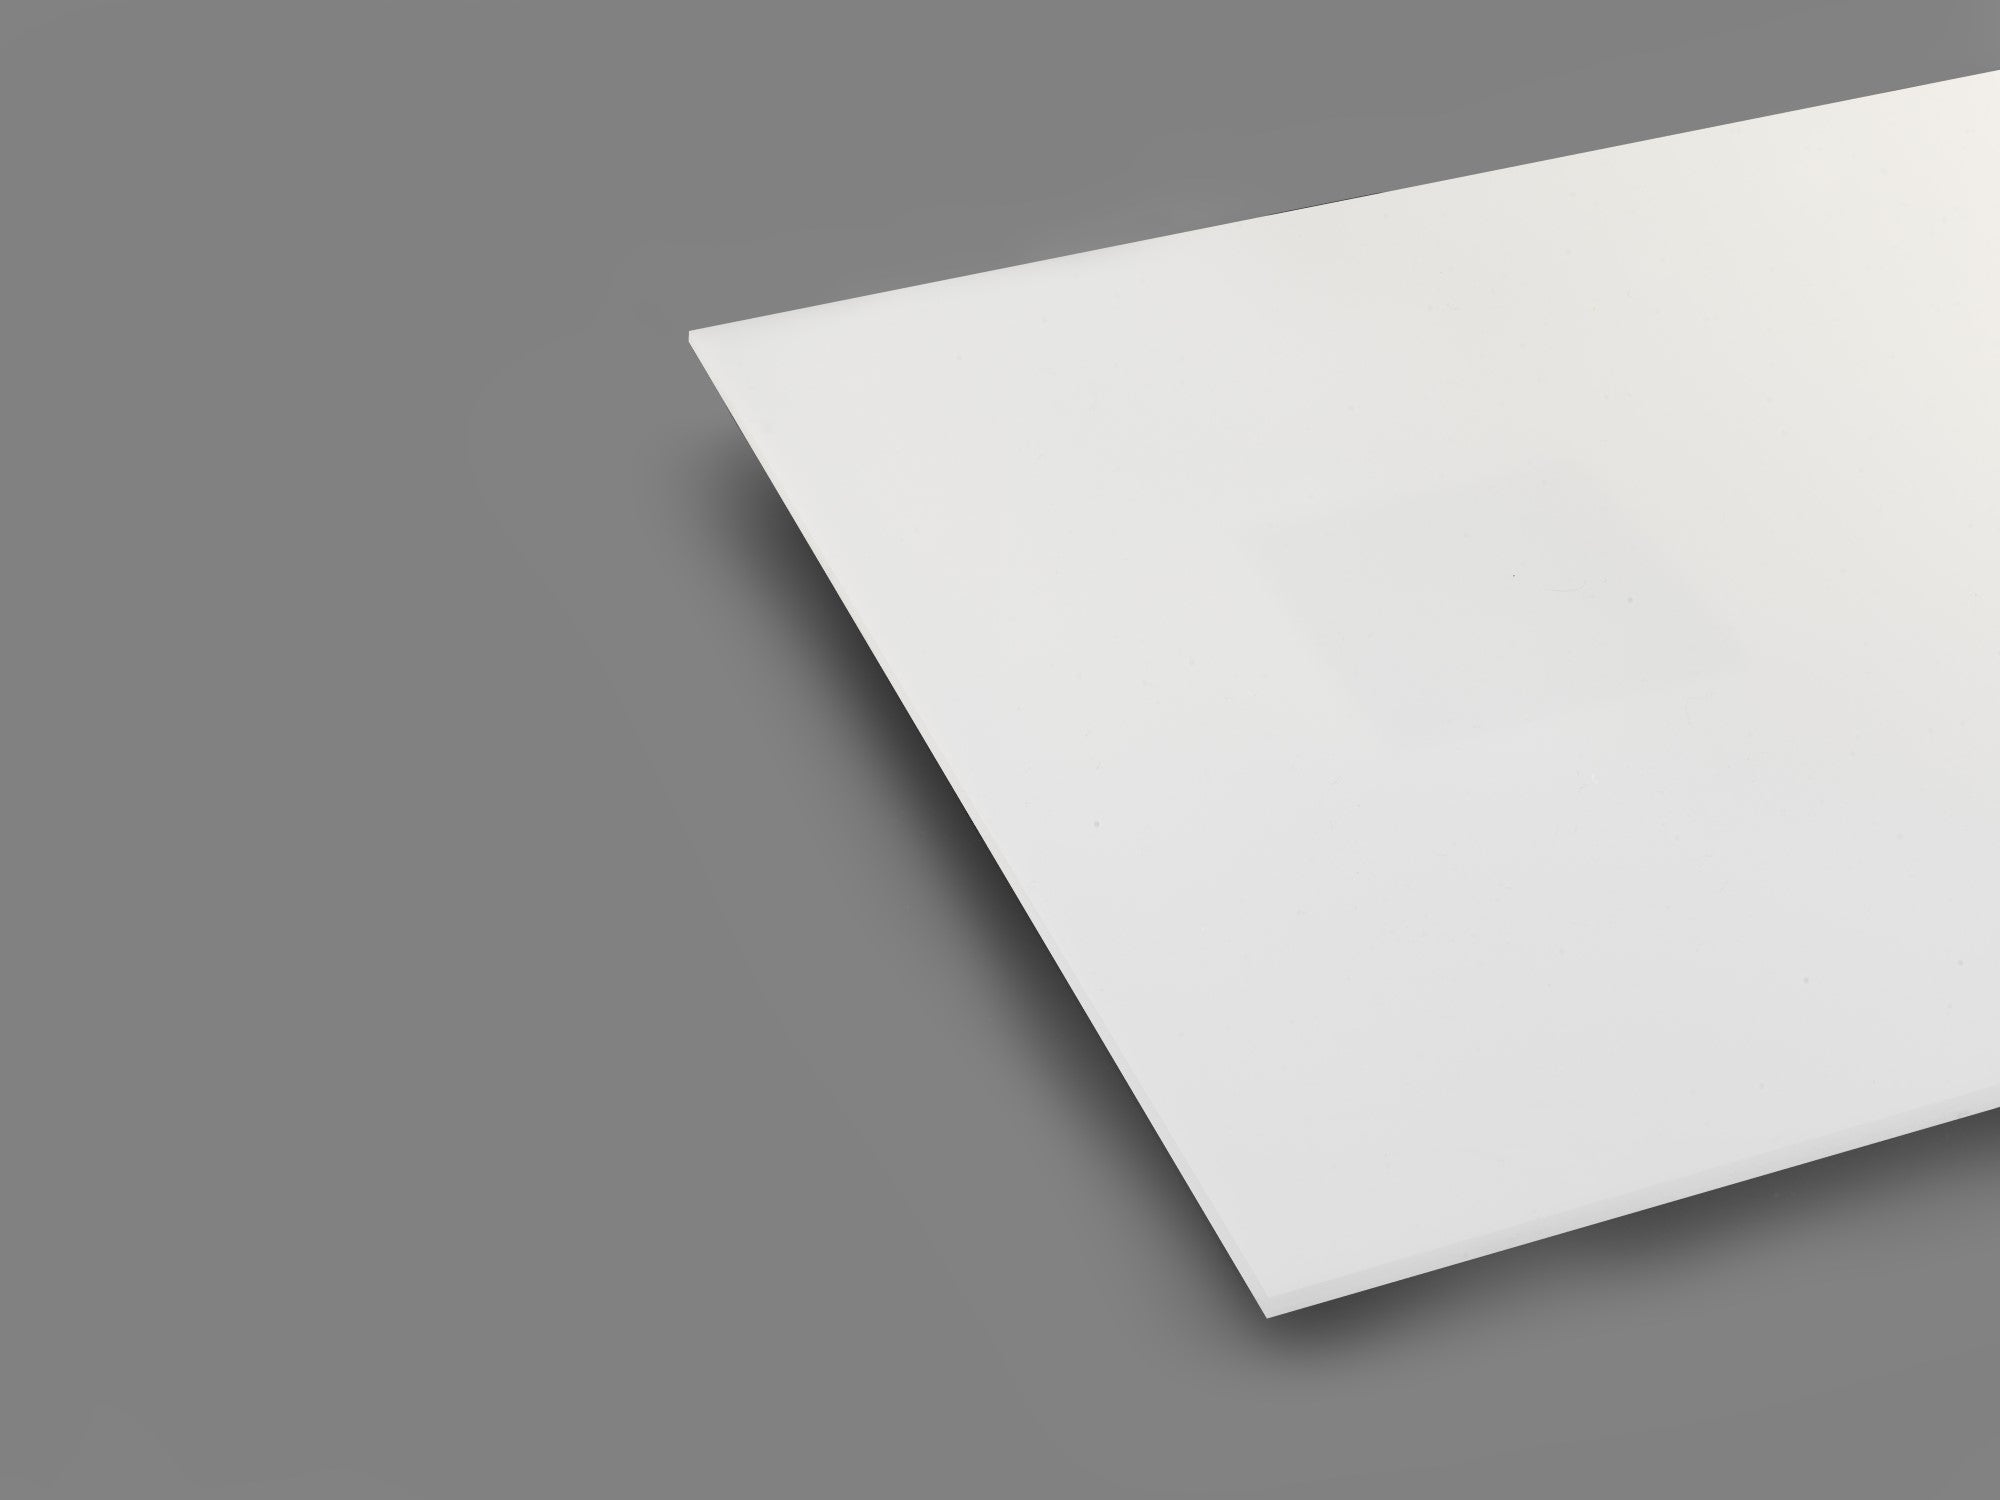 Cast Acrylic Translucent White 4' x 8' x 4.5 mm (3/16)